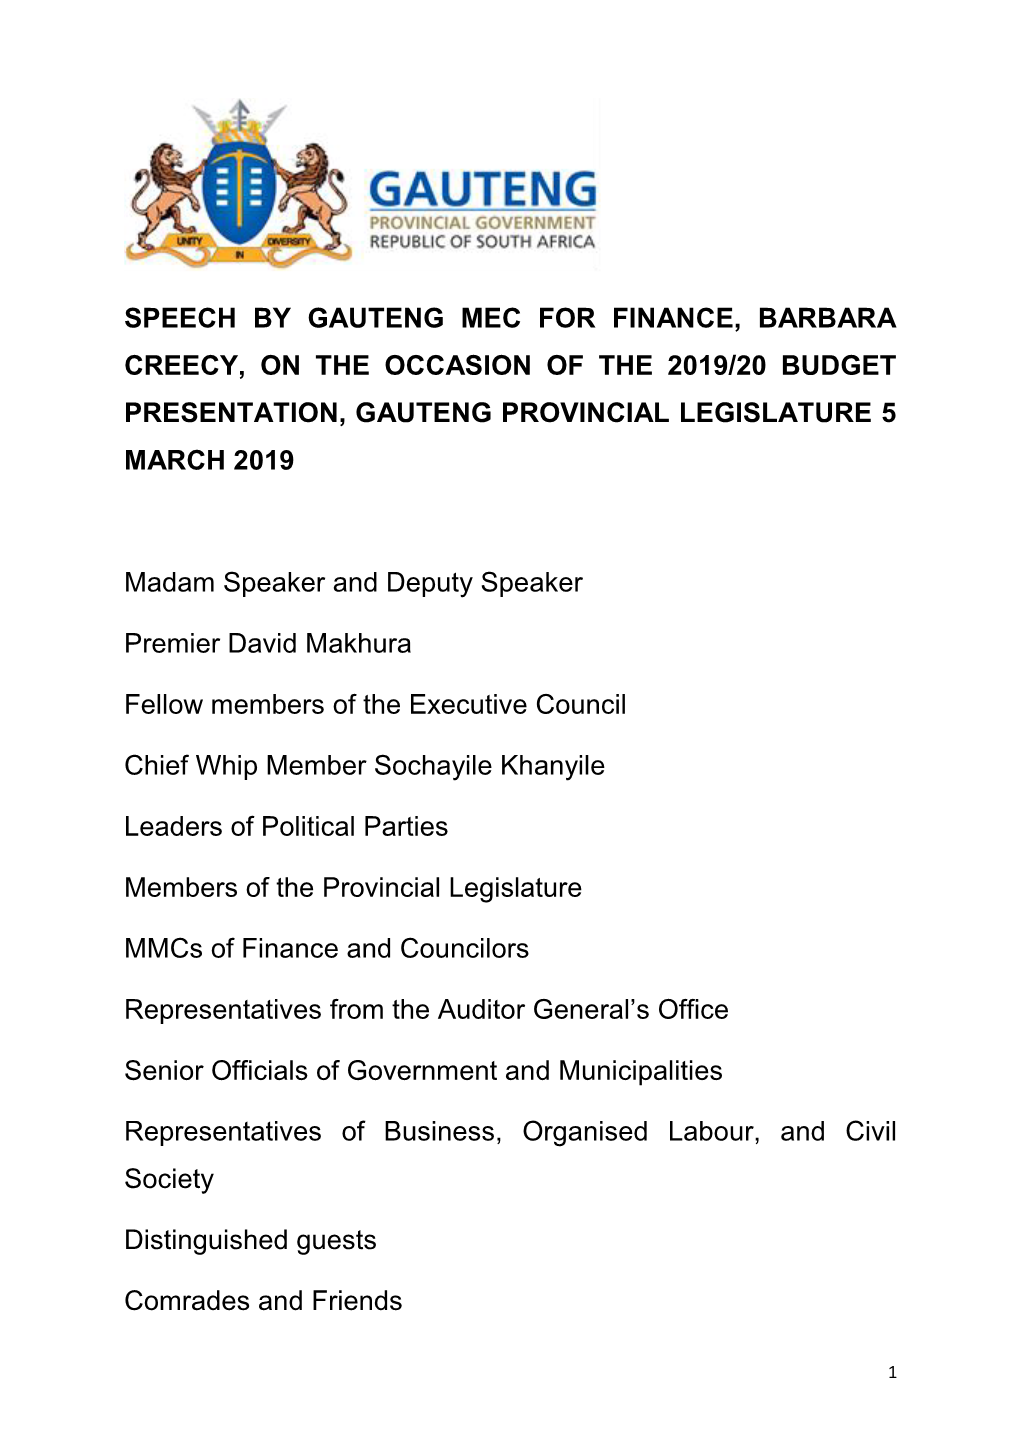 Gauteng Mec for Finance, Barbara Creecy, on the Occasion of the 2019/20 Budget Presentation, Gauteng Provincial Legislature 5 March 2019